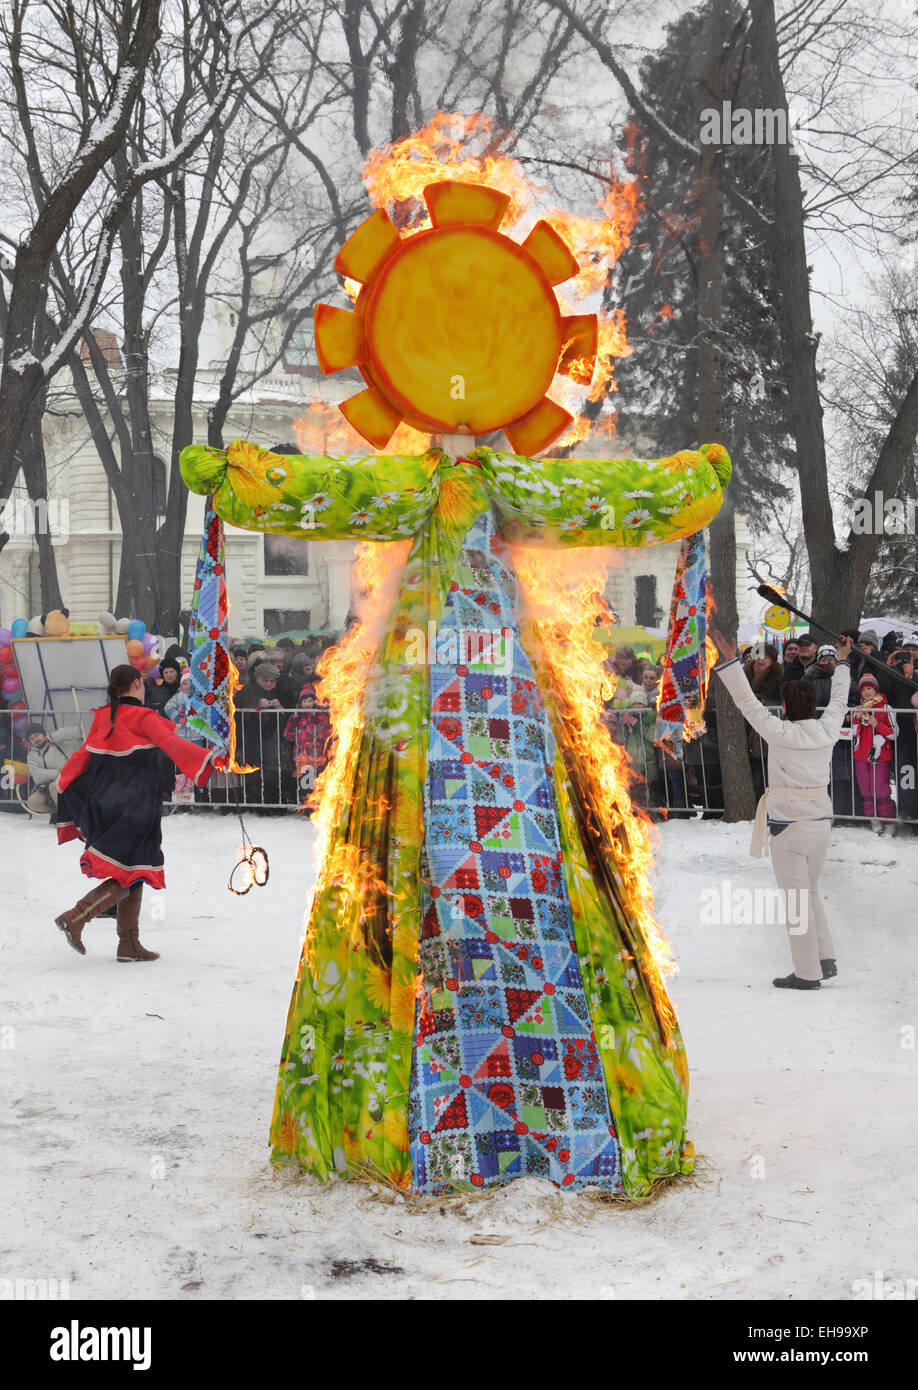 Celebration of Maslenitsa,Butter Week or Pancake week feast,Big doll for the burning. Russia, Tambov, 2015 Stock Photo